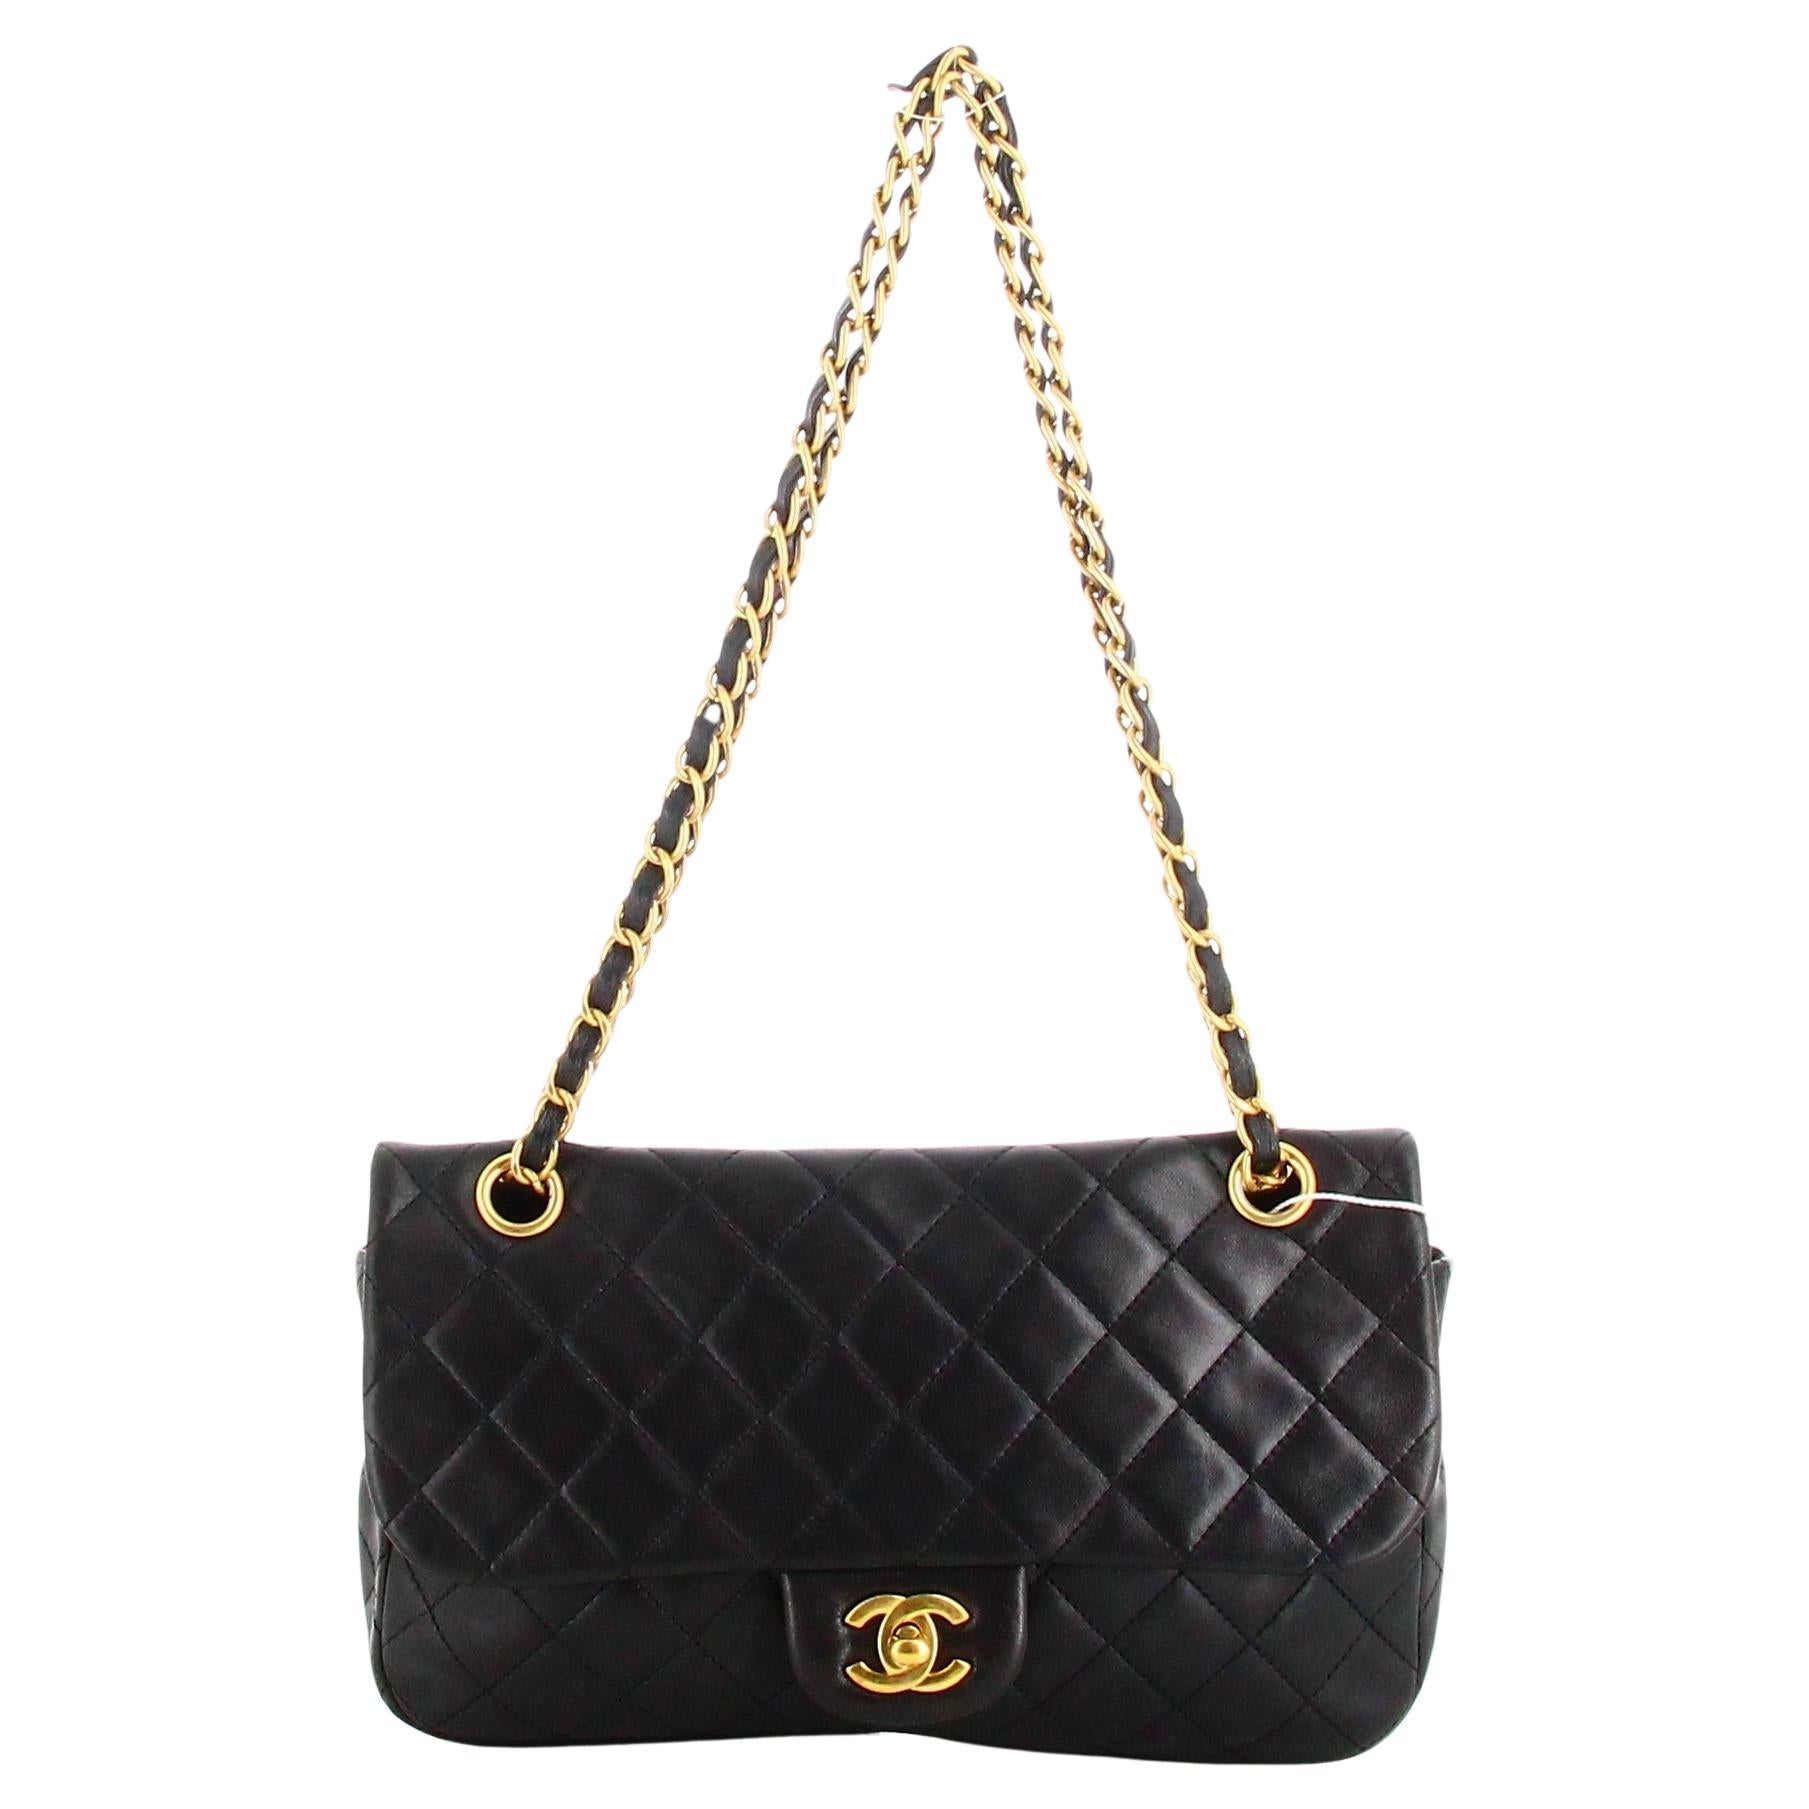 2010 Chanel Medium Classic Lambskin Single Flap Handbag For Sale